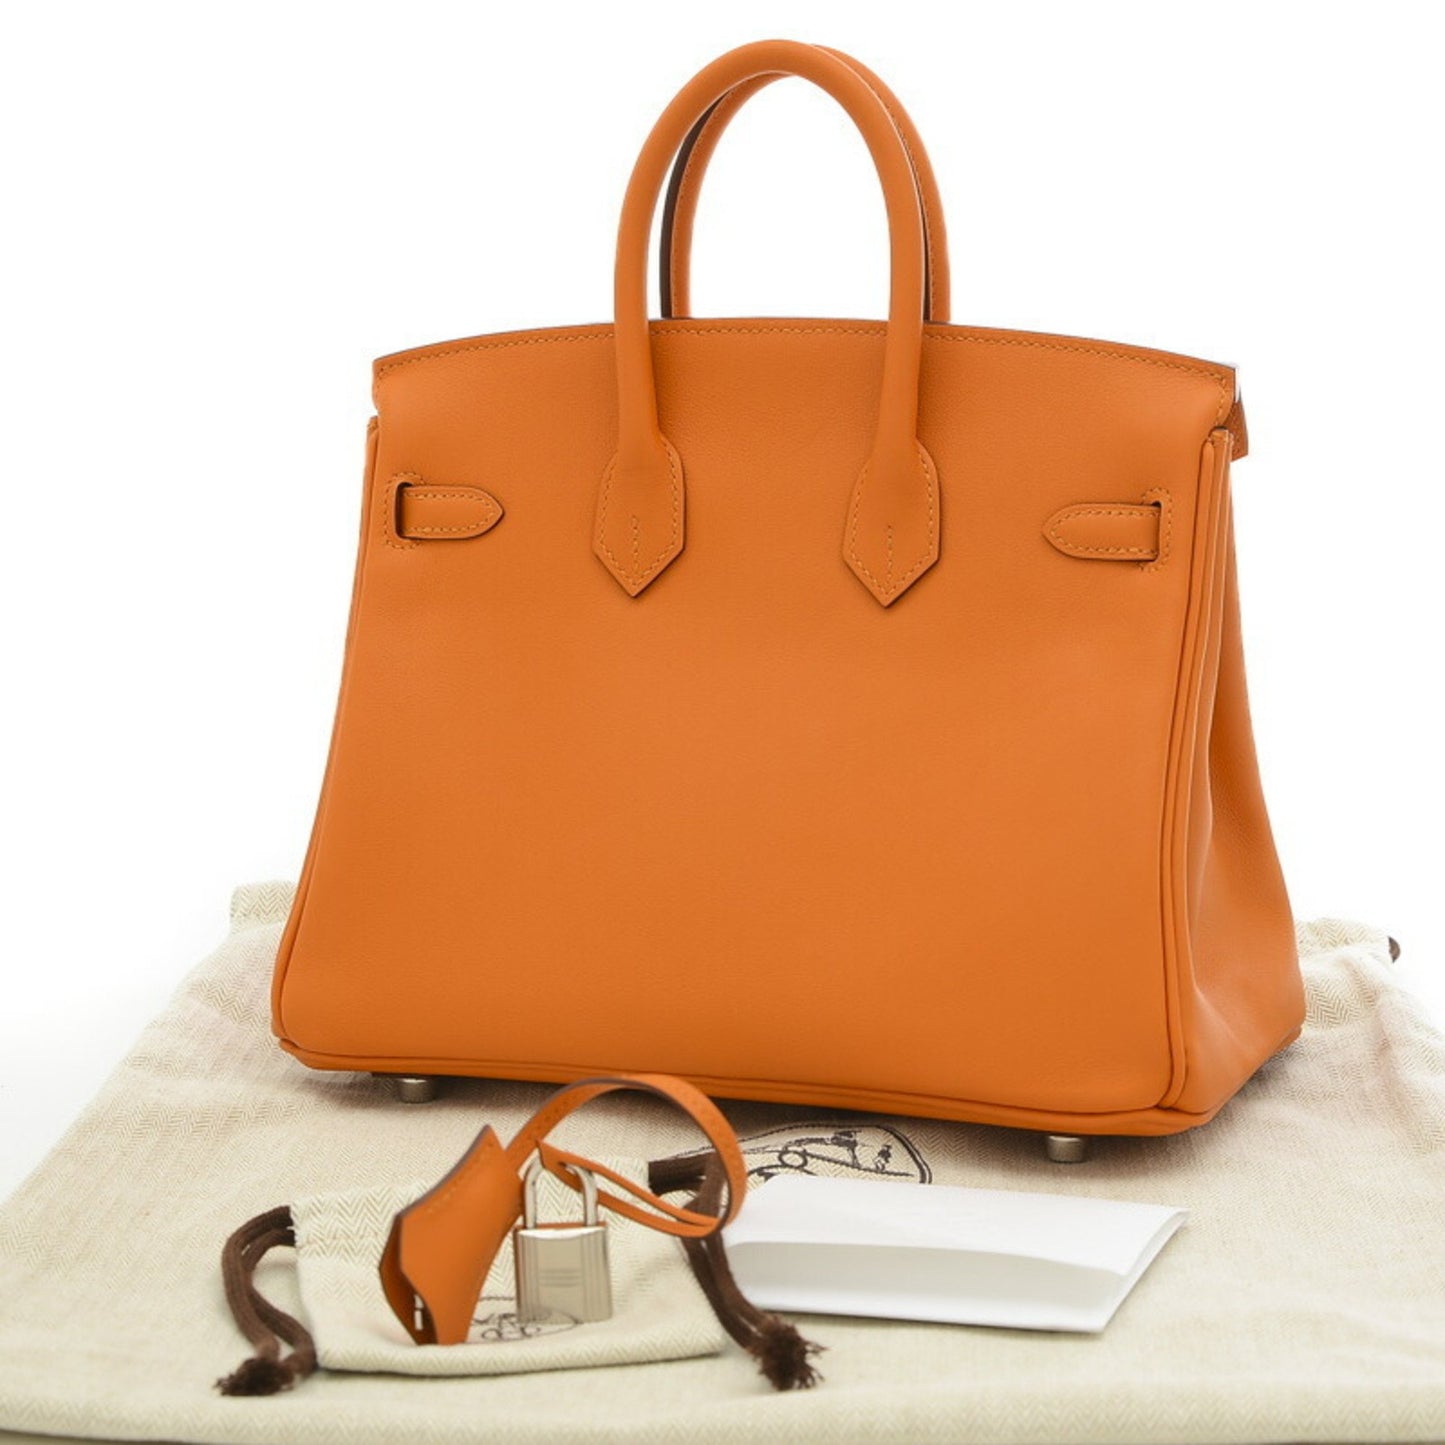 Hermes Women's Luxury Leather Handbag with Silver Hardware in Orange